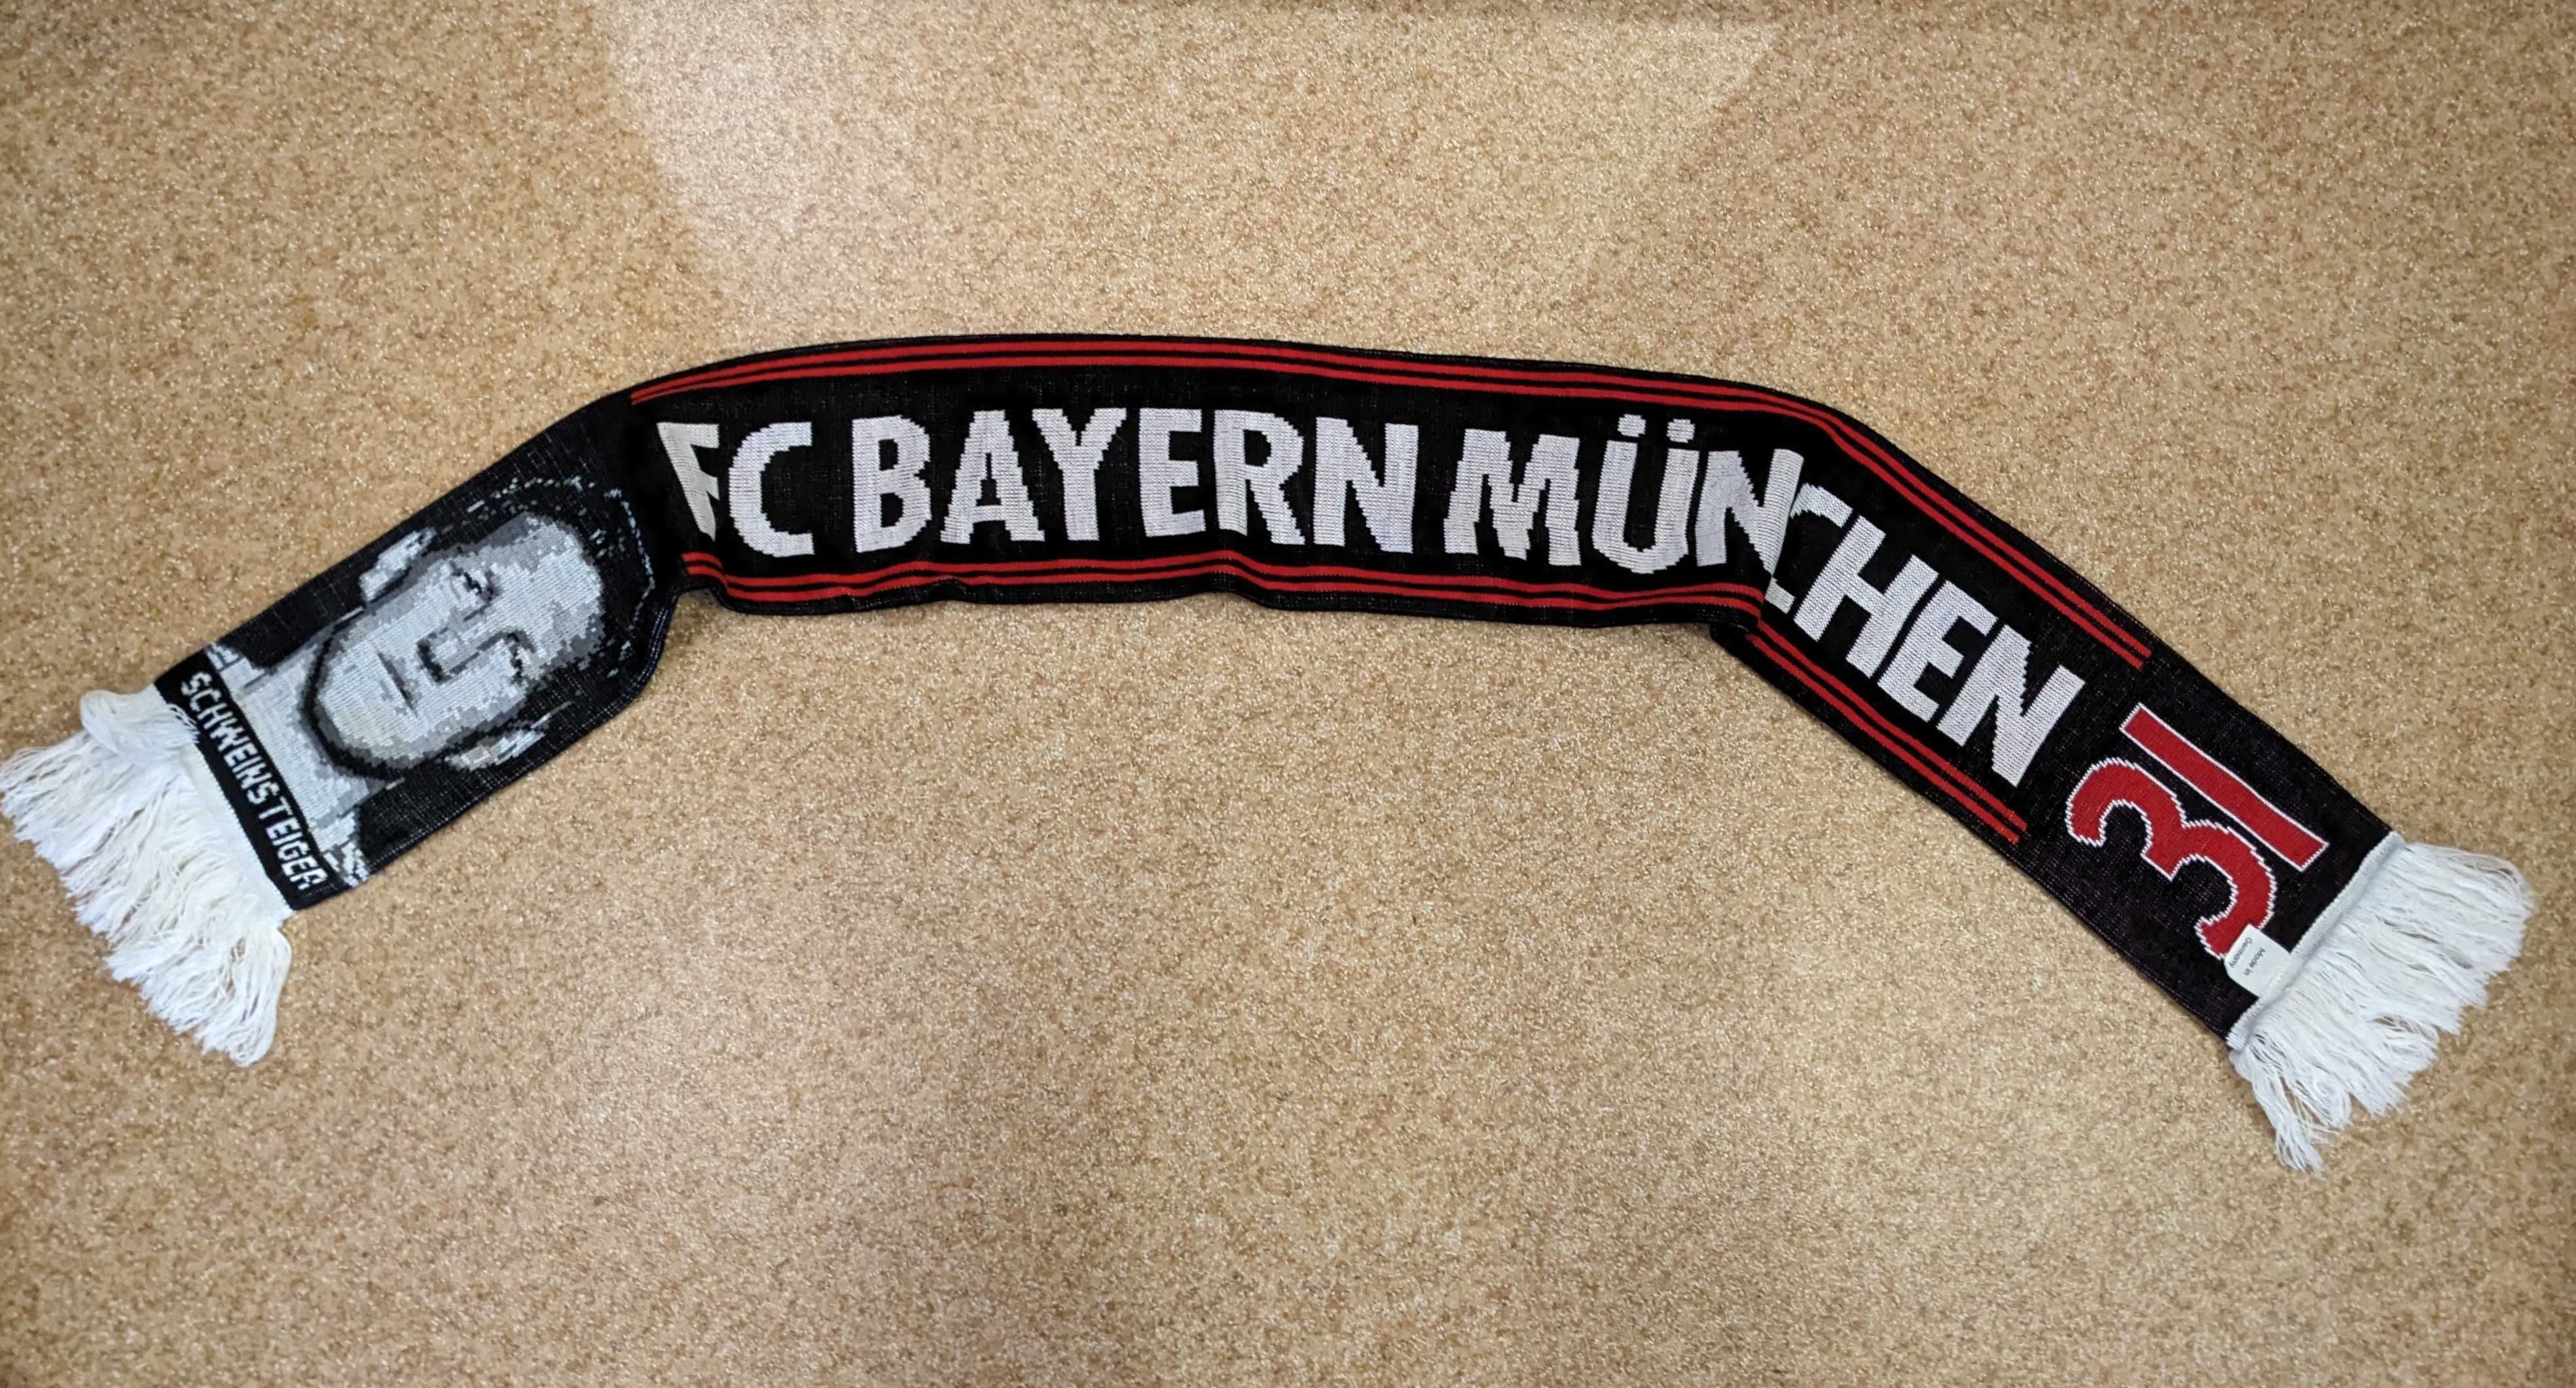 Футбольный шарф Bayern Munich Bastian Schweinsteiger